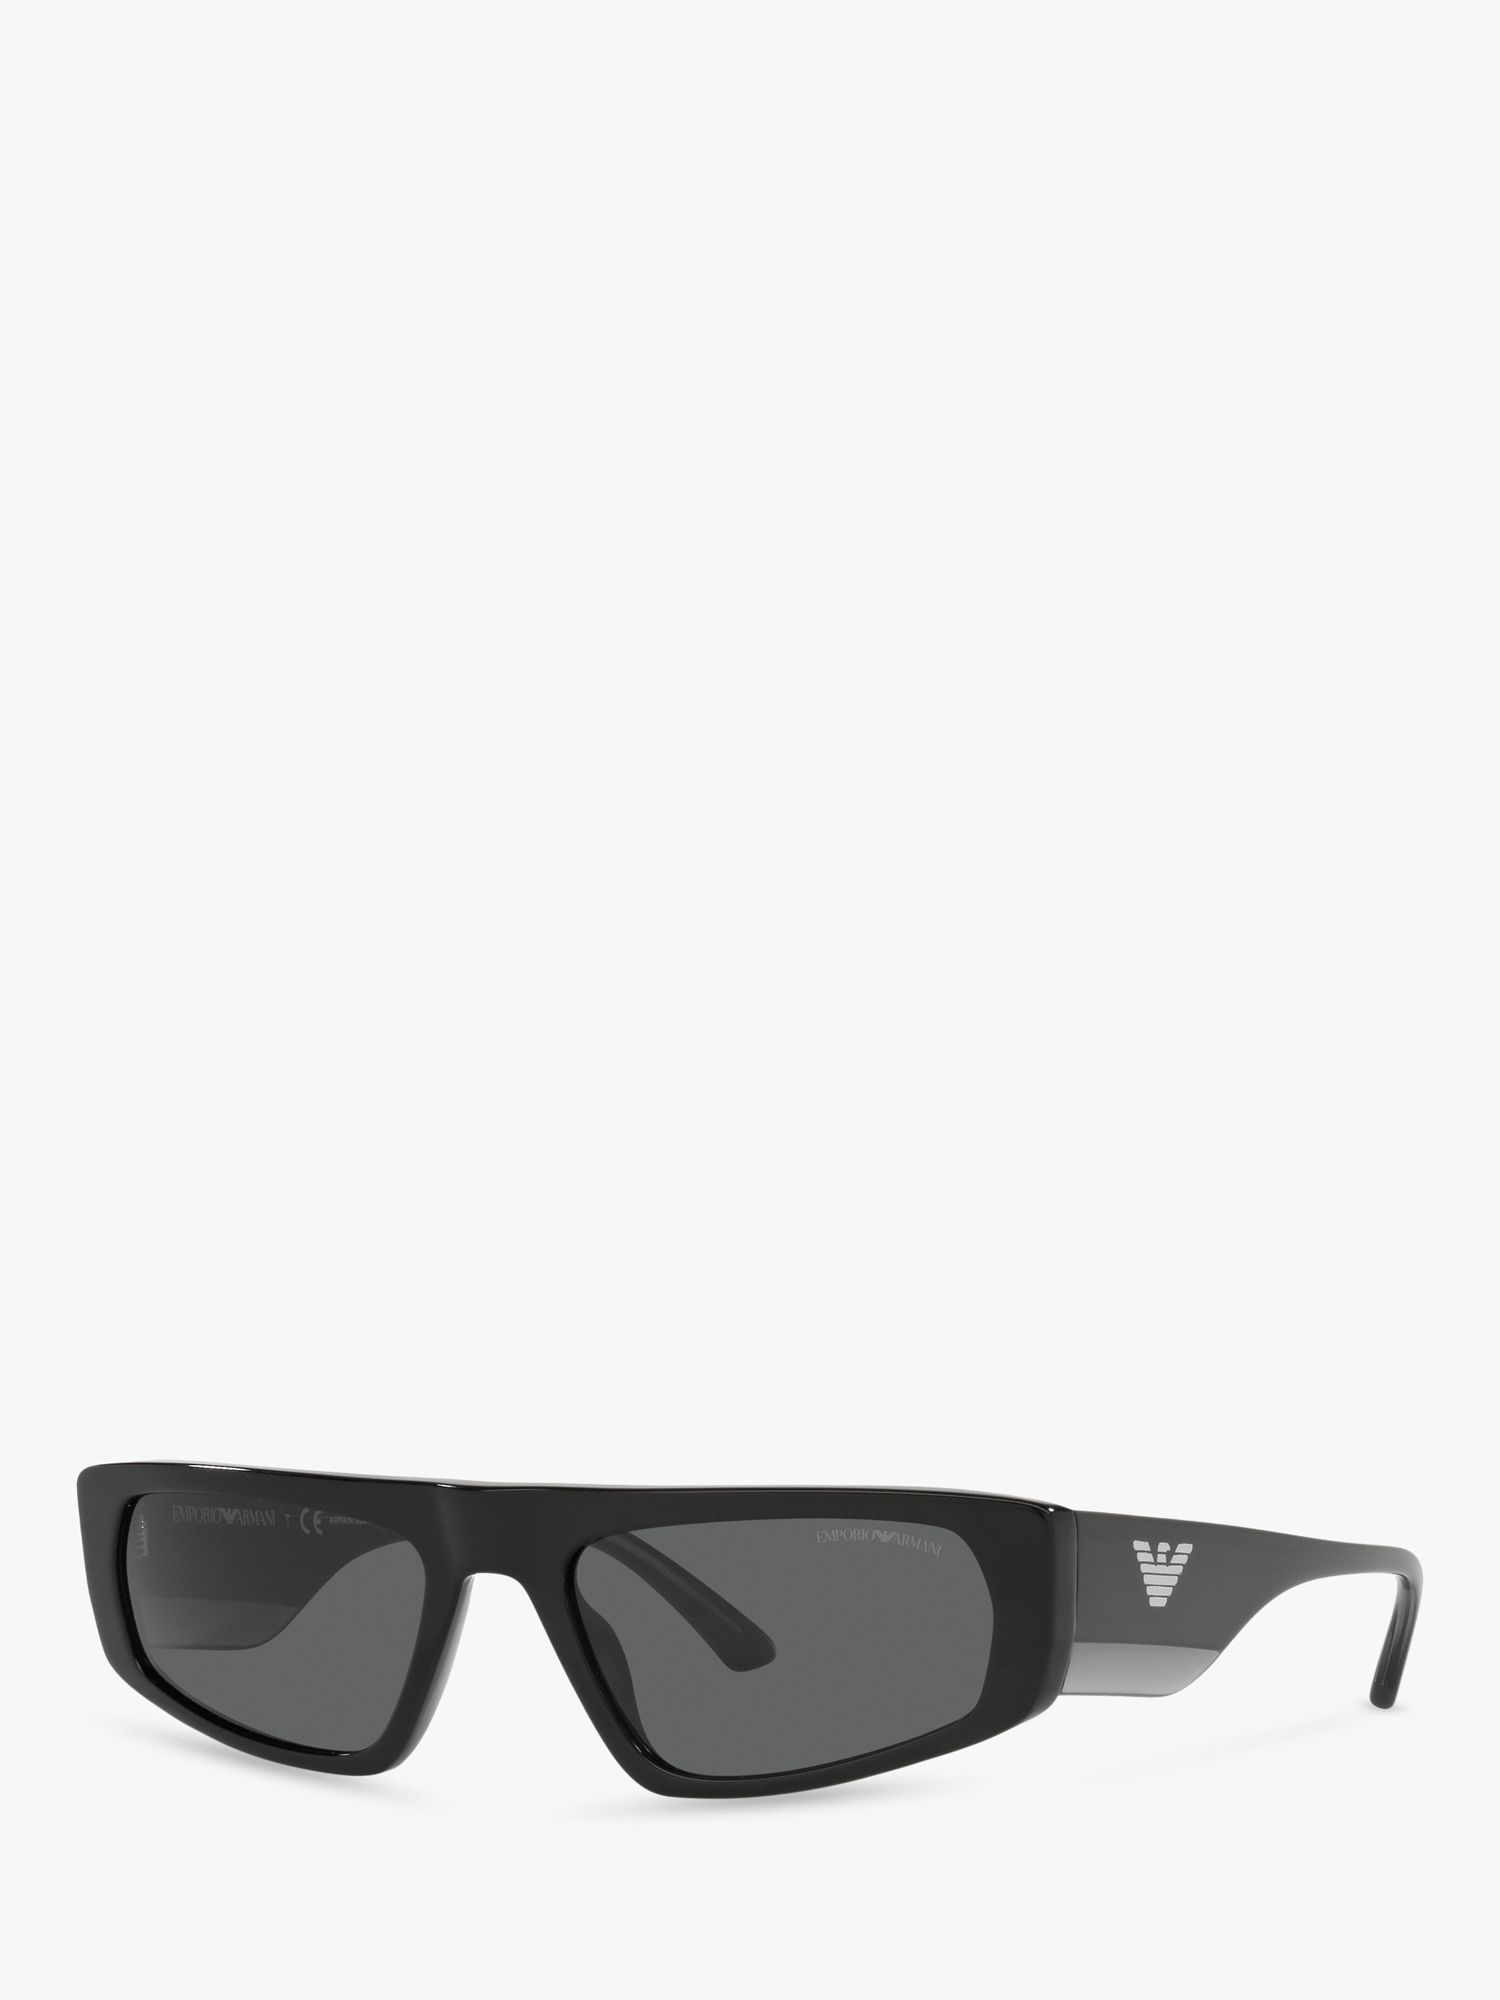 Emporio Armani EA4168 Men's Pillow Sunglasses, Black/Grey at John Lewis ...